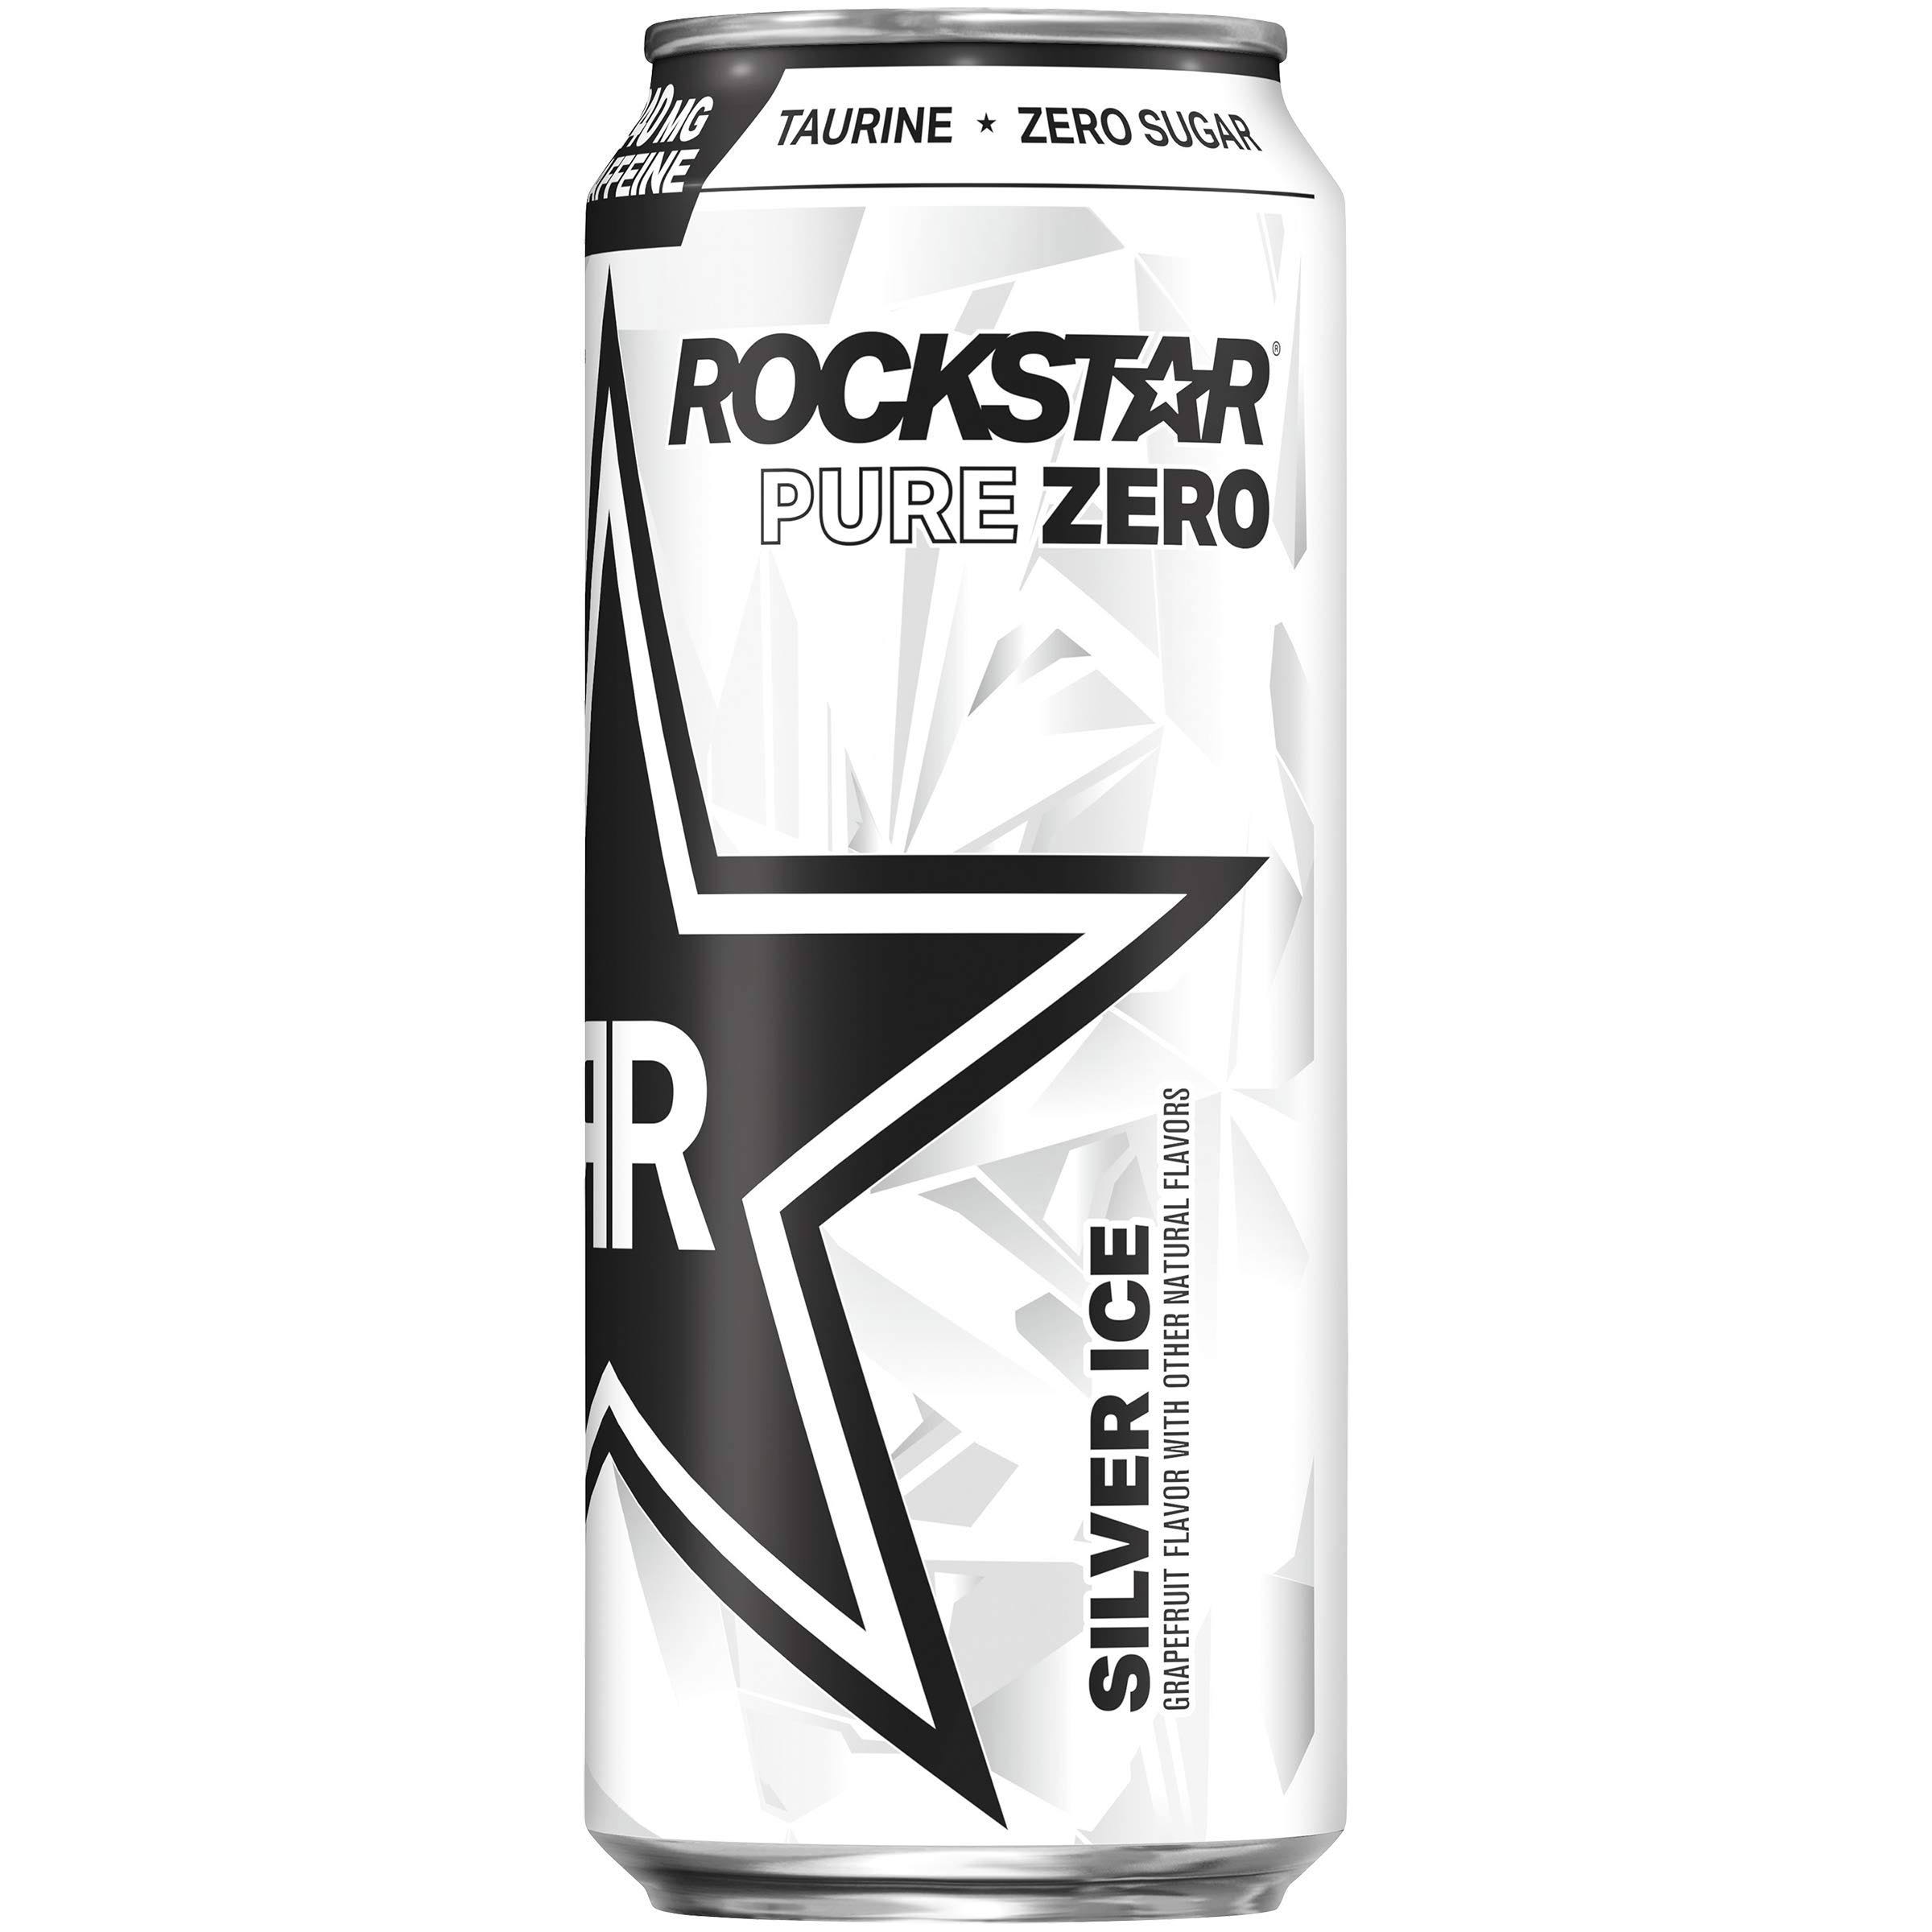 Rockstar Pure Zero Energy Drink, Sugar Free, Silver Ice - 16 fl oz